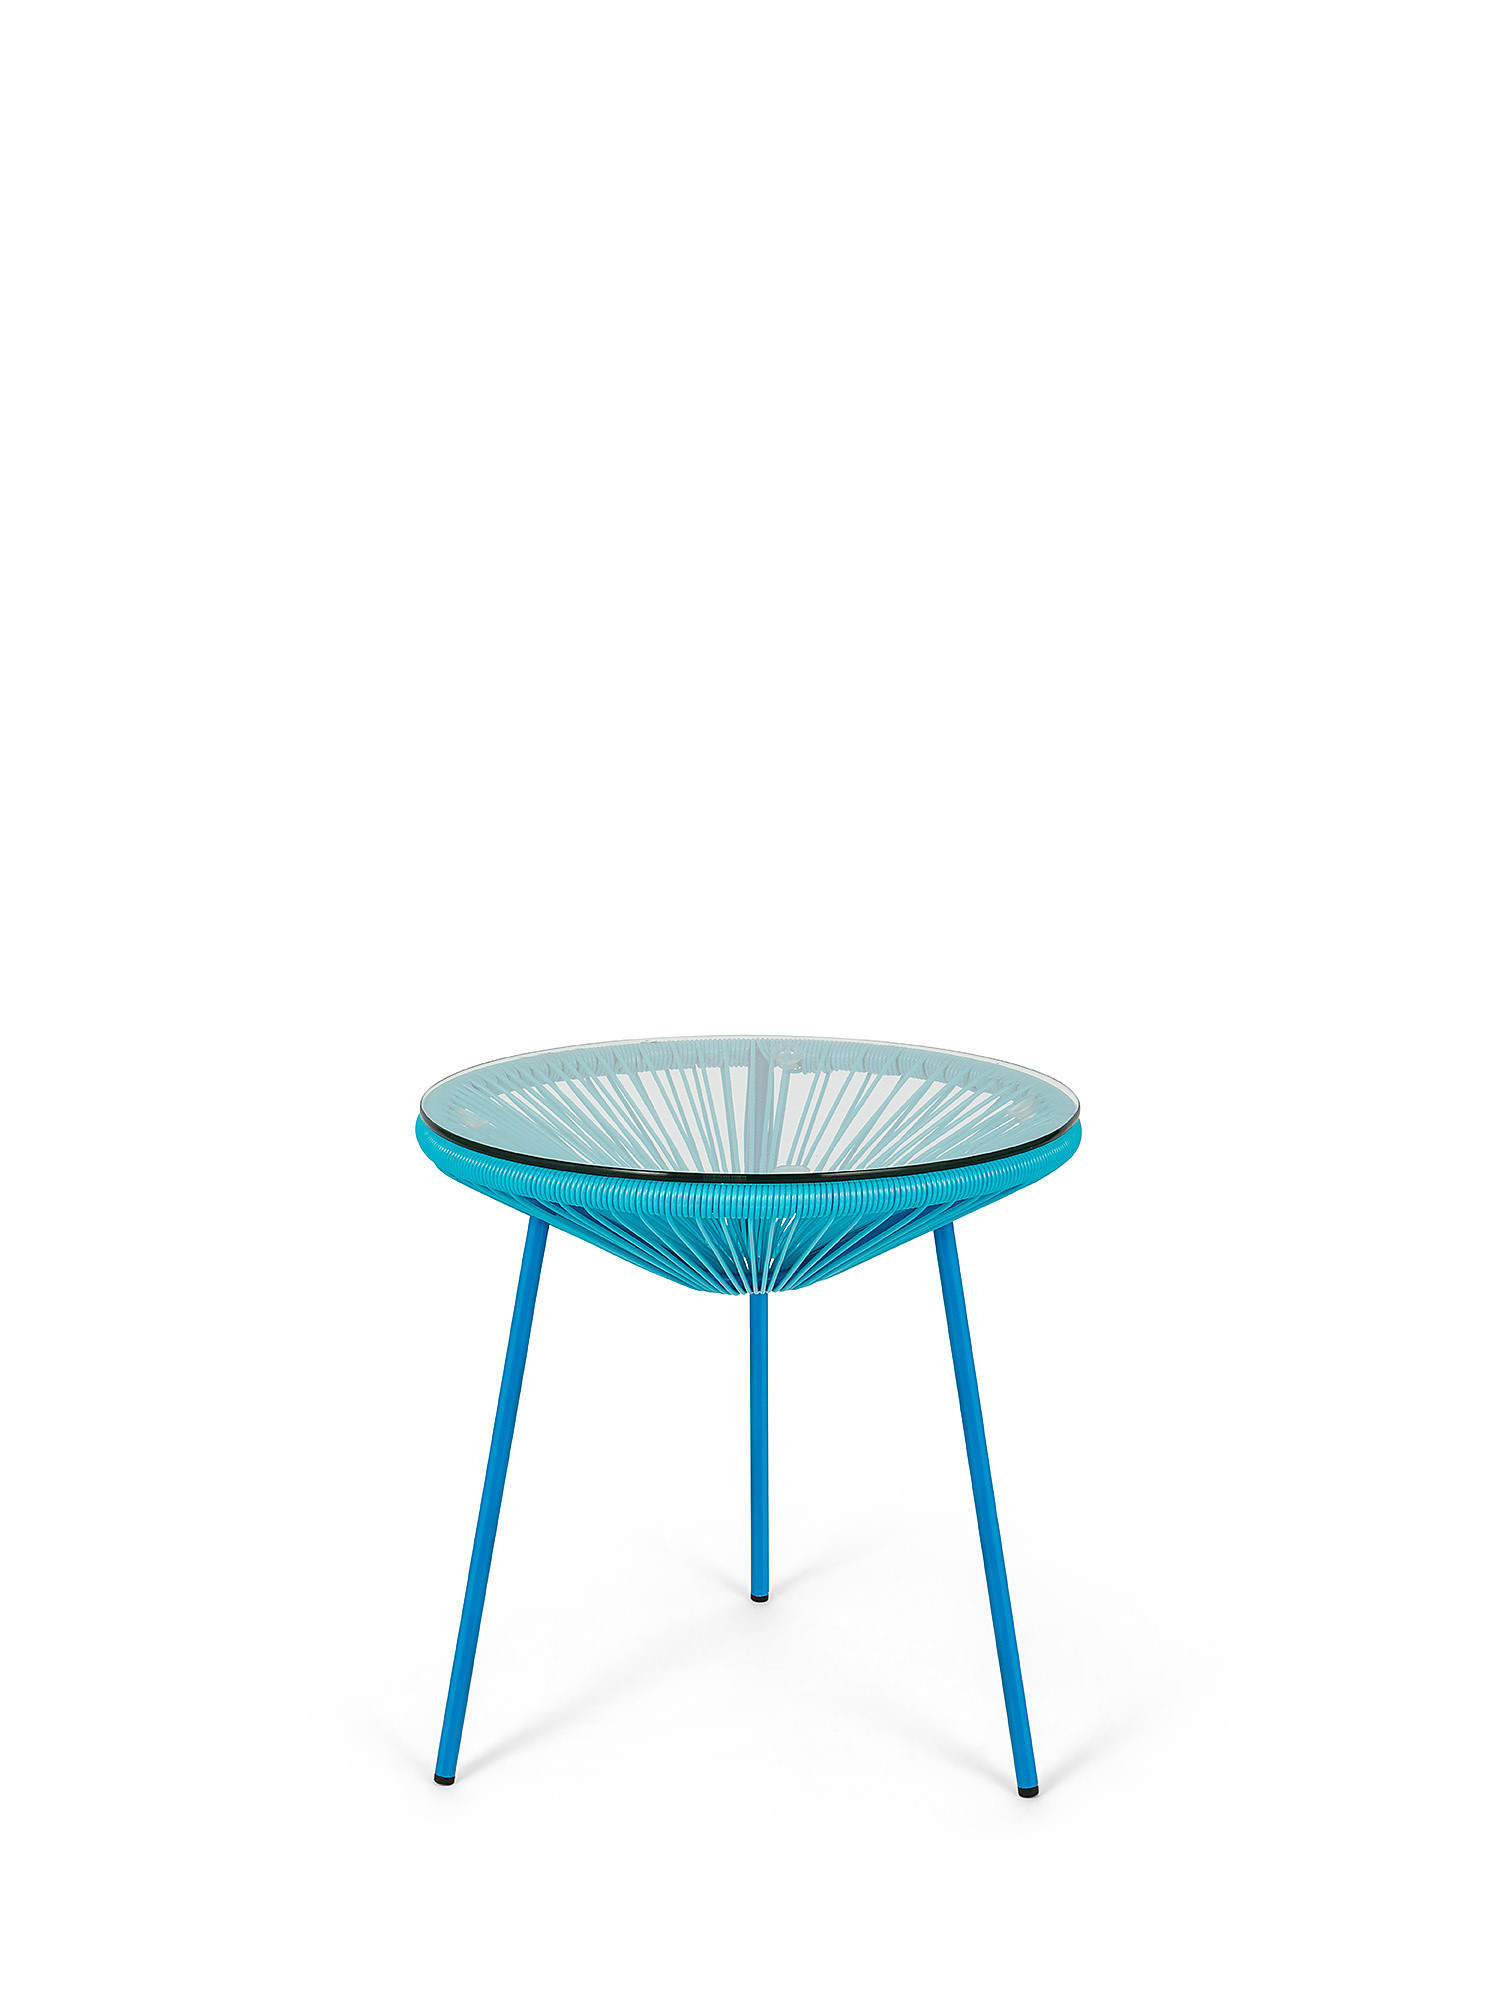 Tavolino da esterno Round, Azzurro, large image number 0